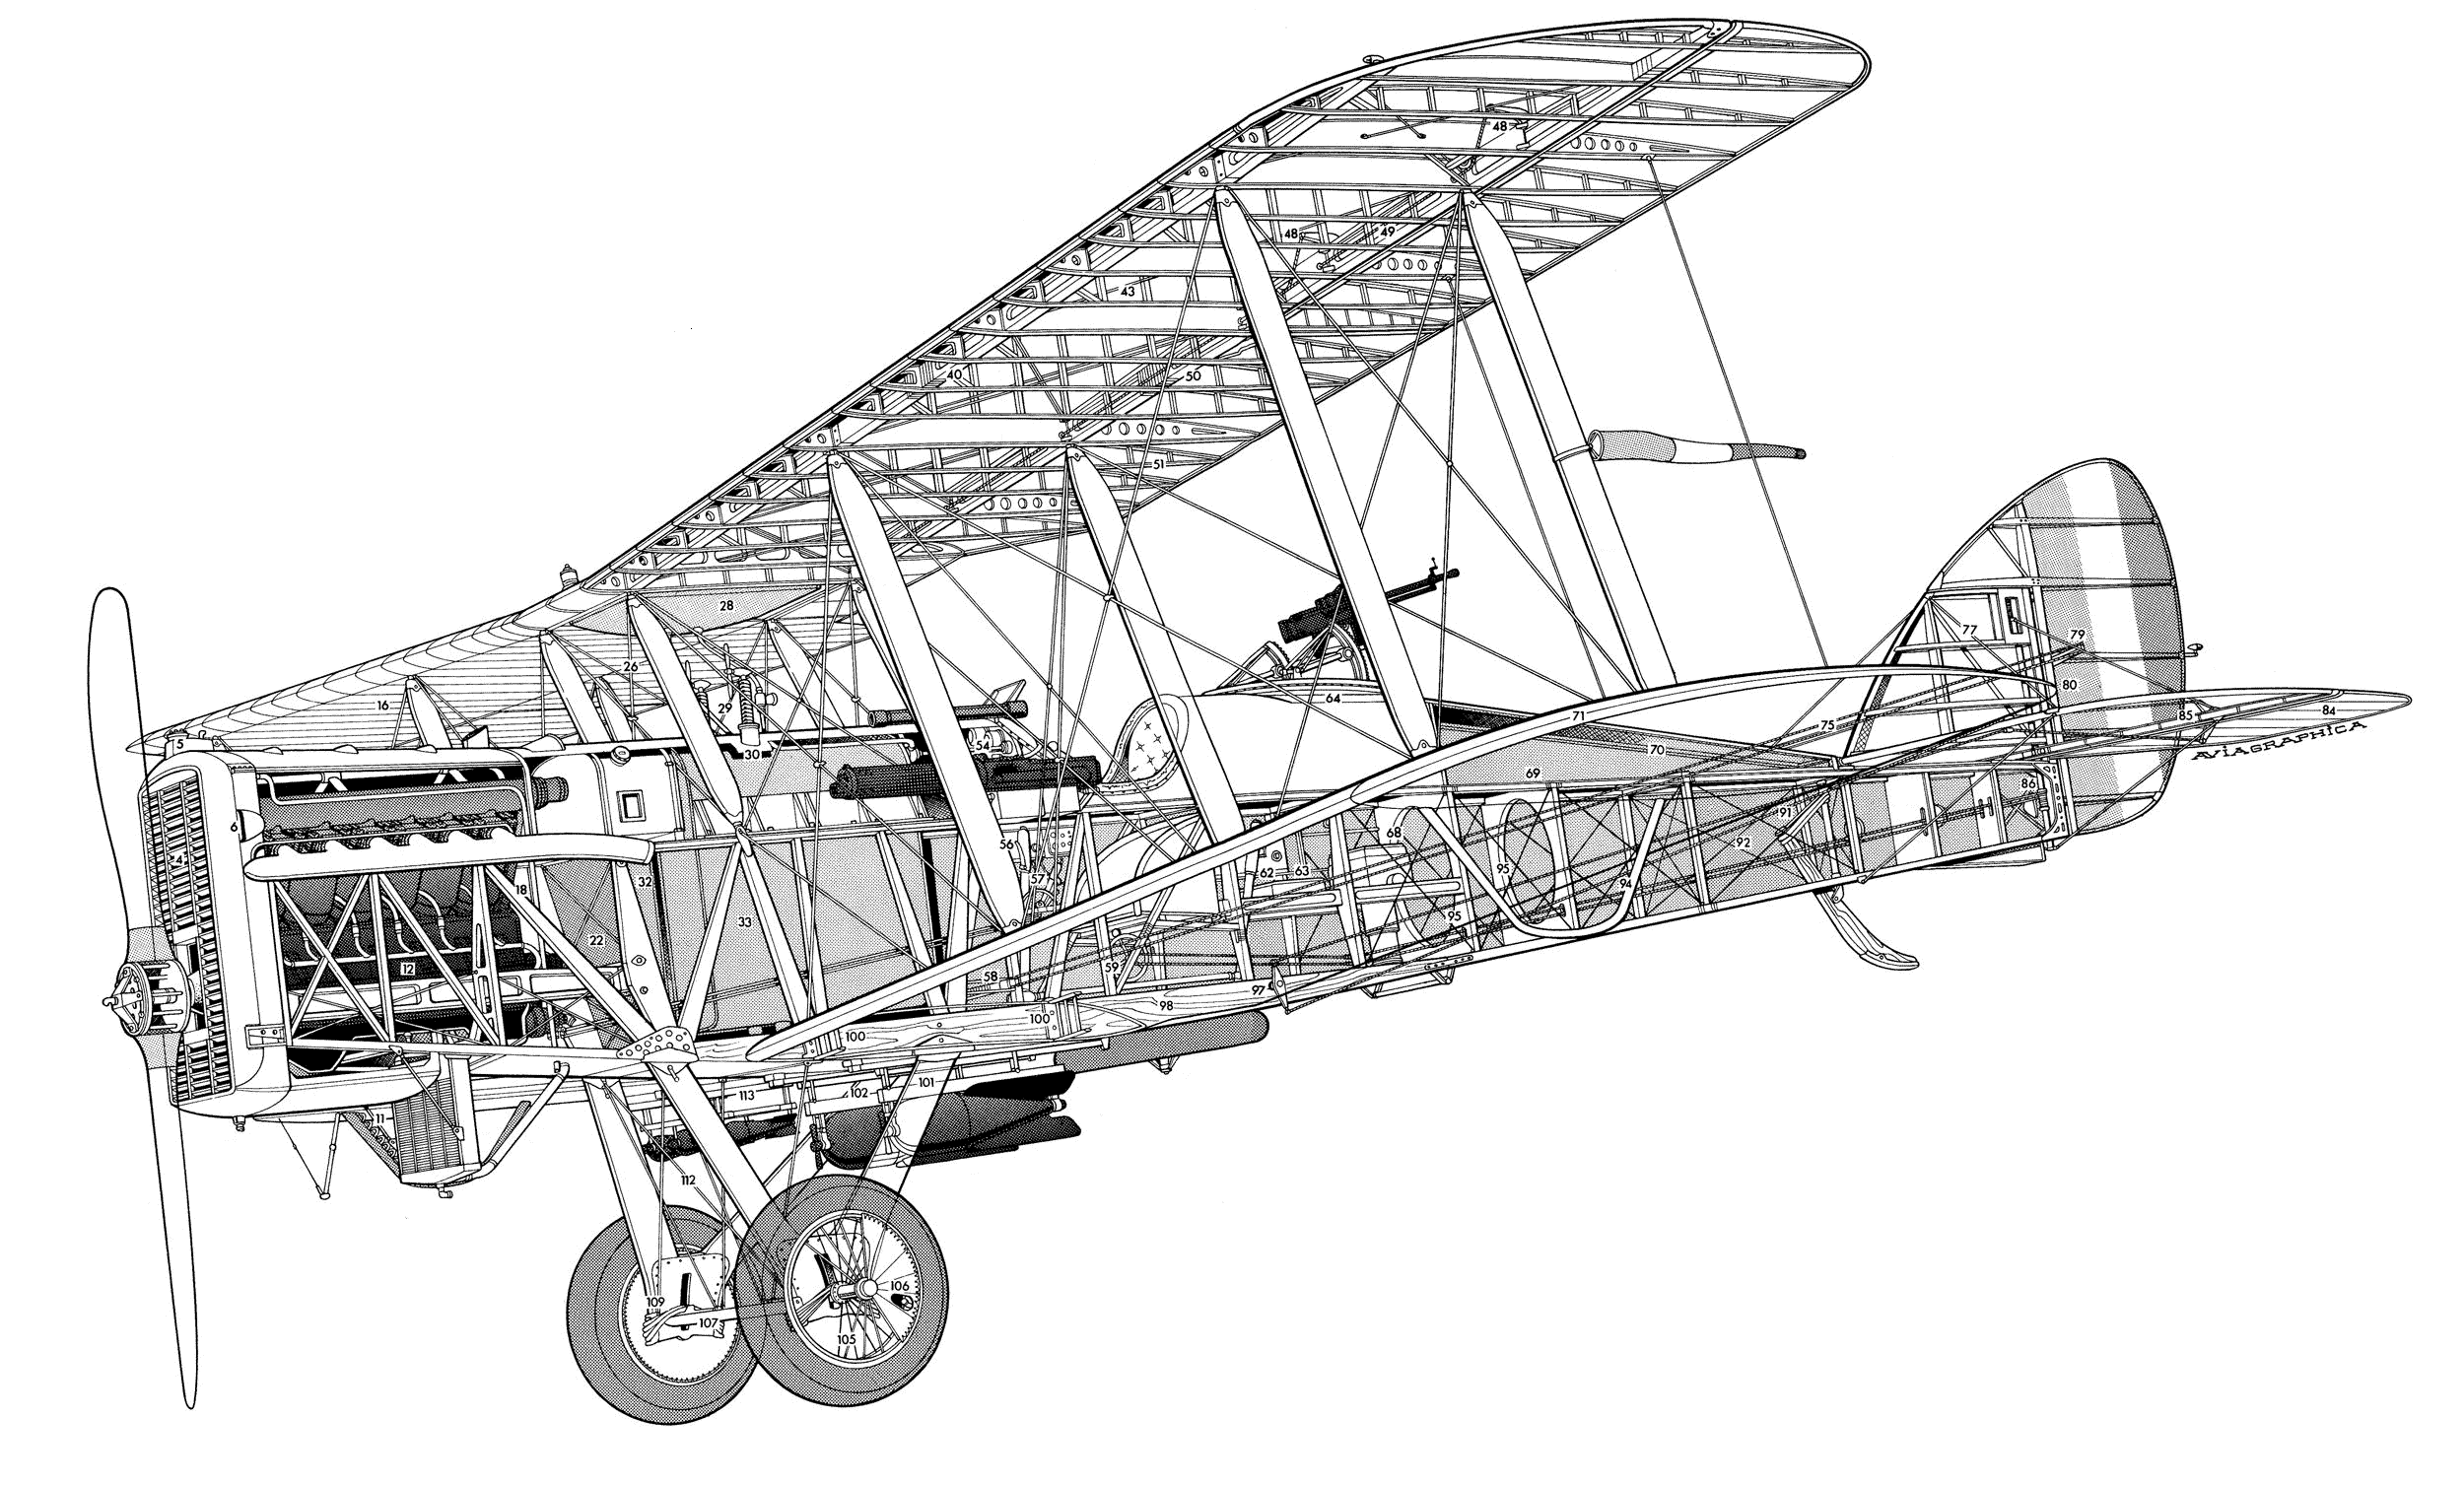 Airco DH.9A cutaway drawing